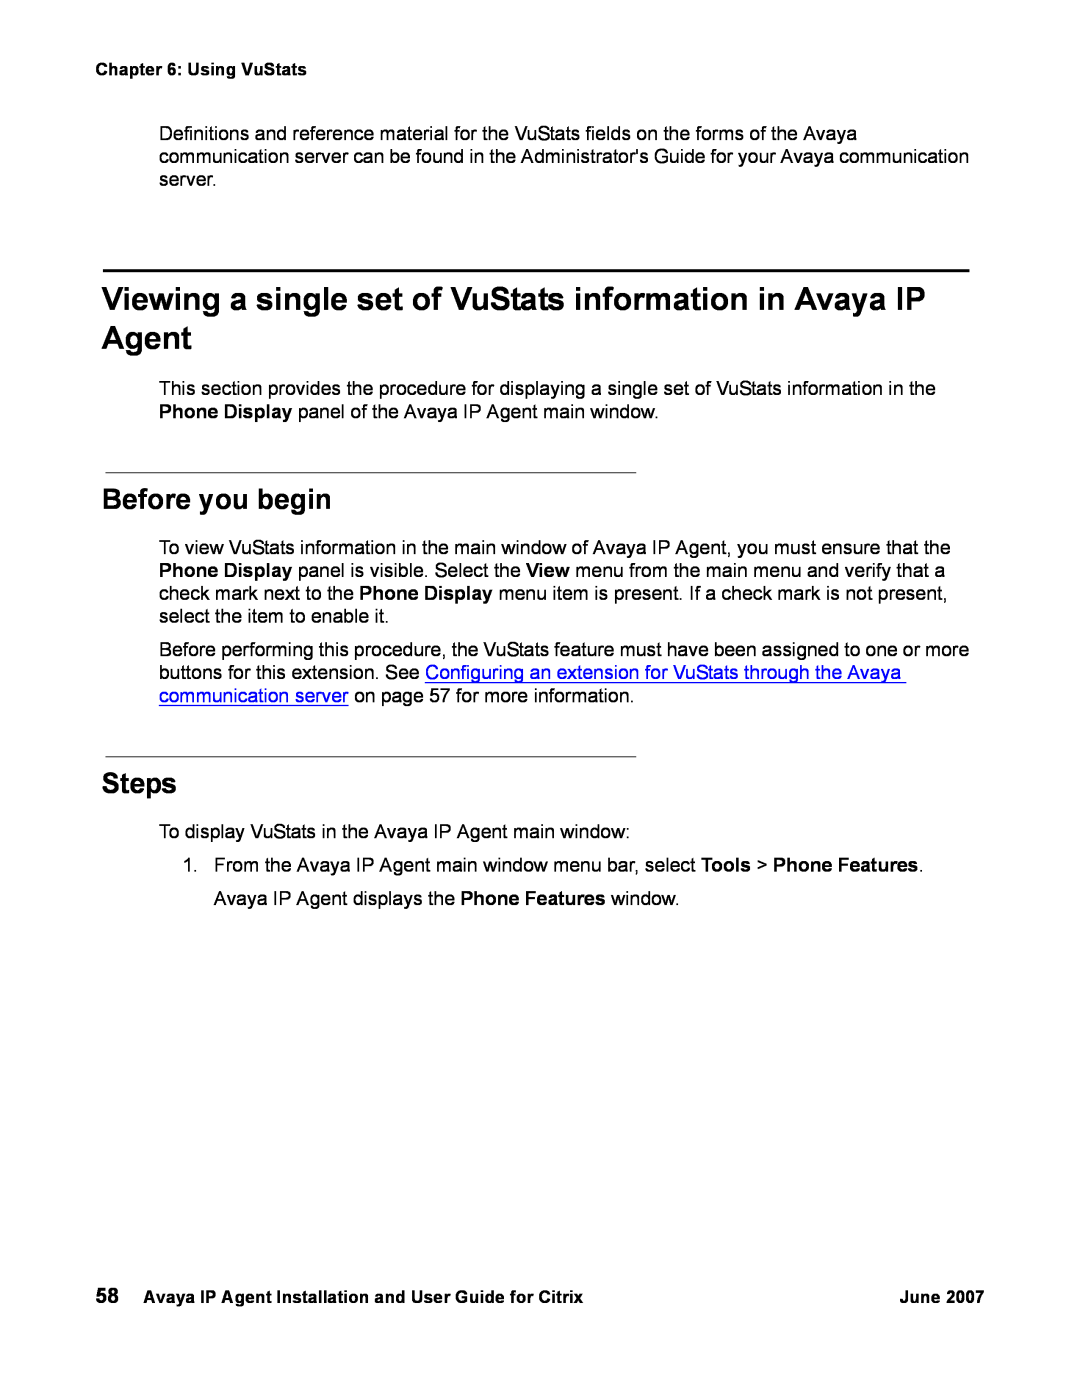 Avaya 7 manual Viewing a single set of VuStats information in Avaya IP Agent, Before you begin, Steps 